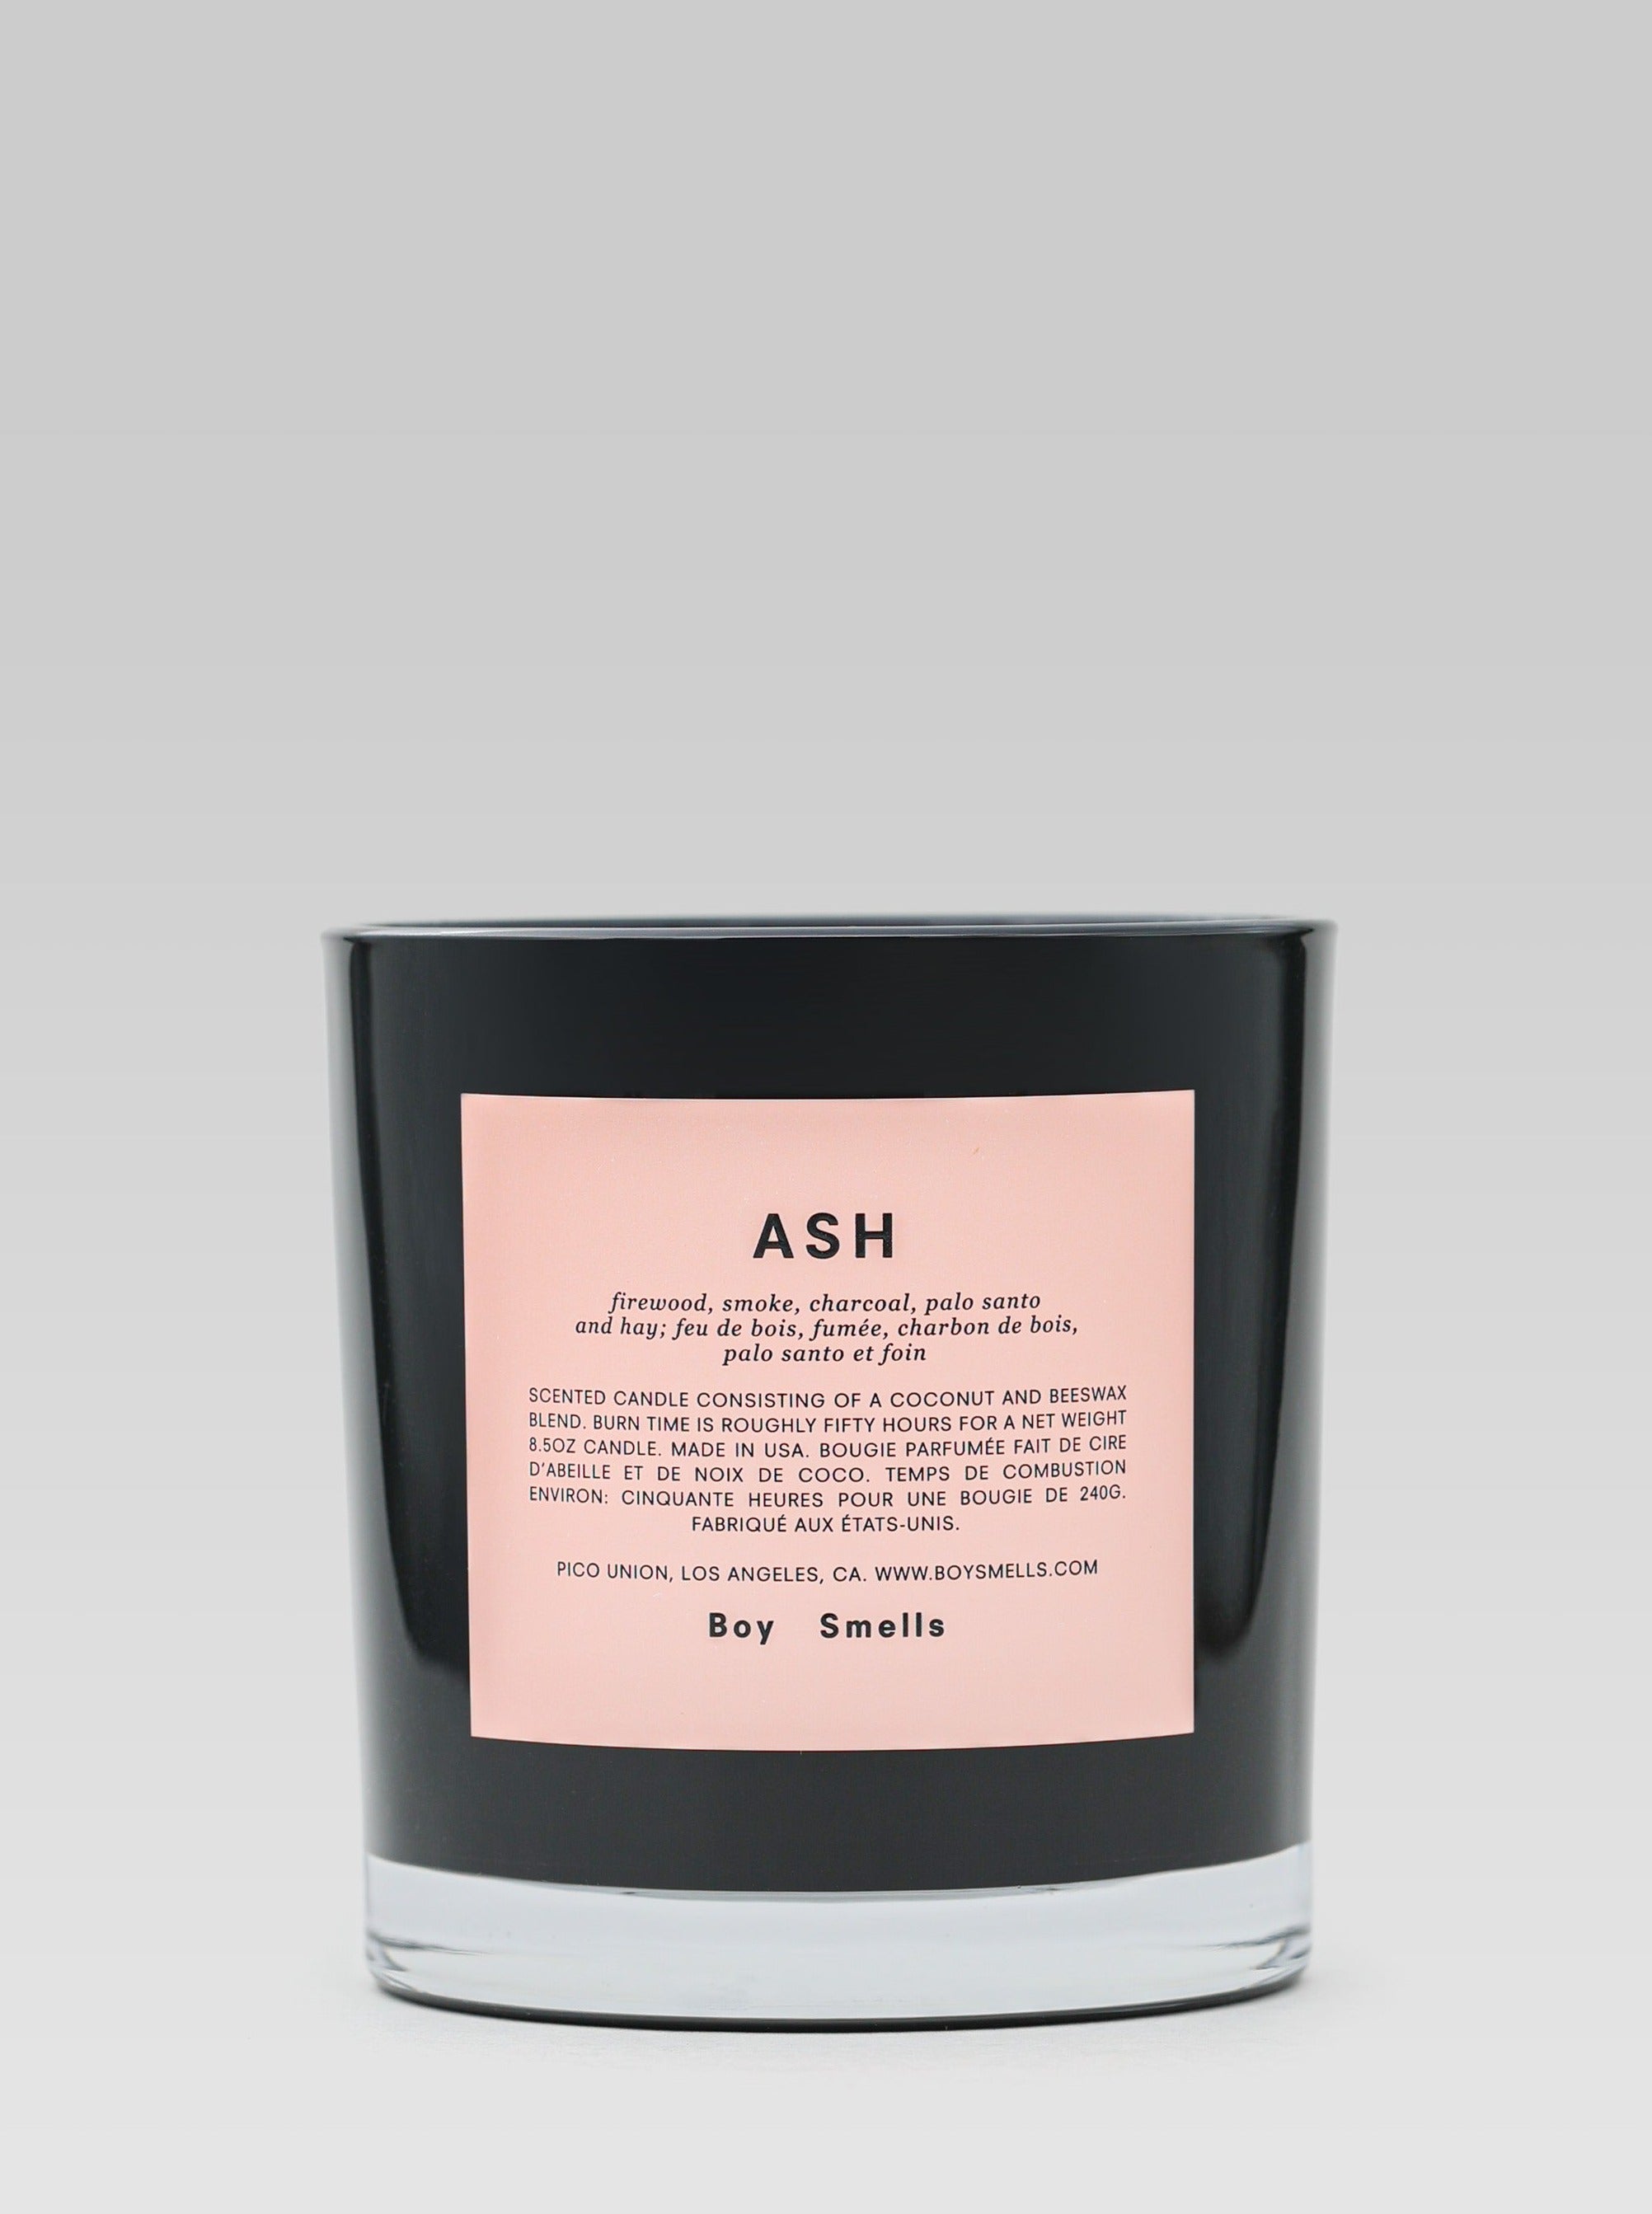 Boy Smells Ash Candle product shot